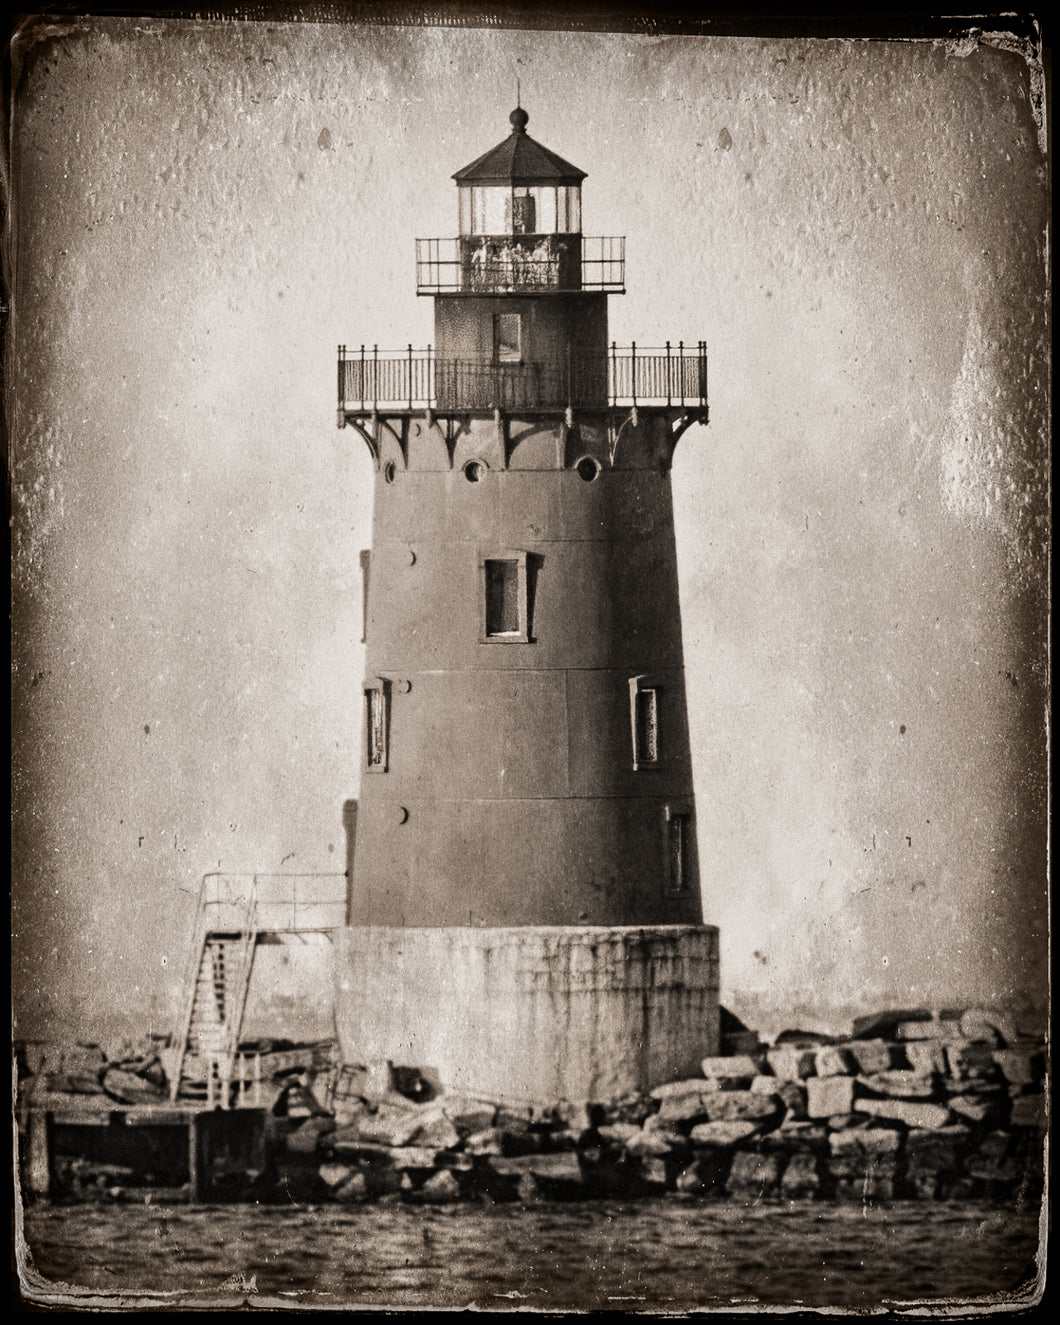 Tintype style Cape Delaware Breakwater Light photograph